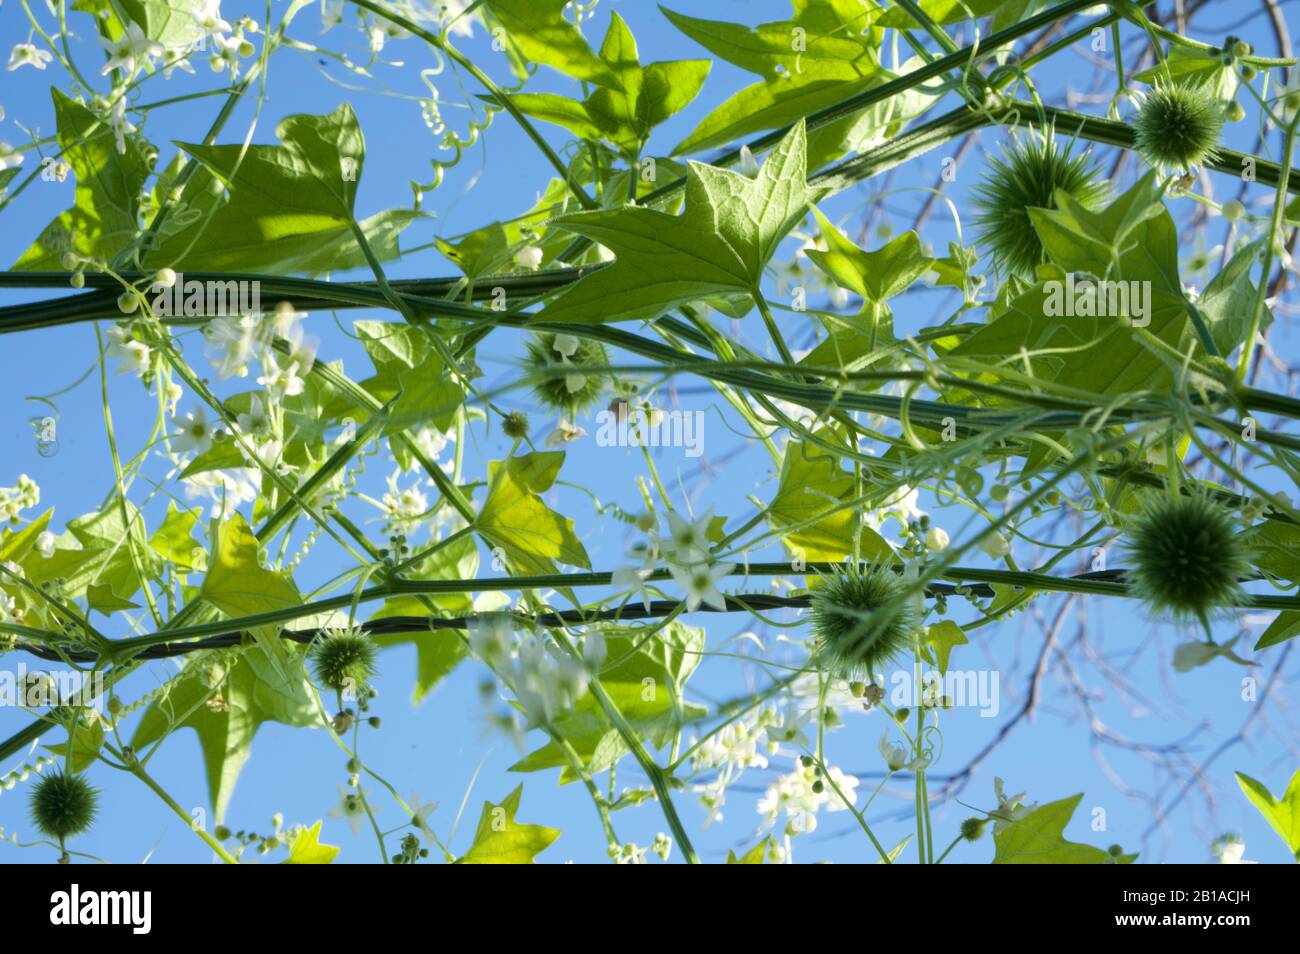 Photos of Wild Cucumber plants (California manroot, Marah Fabacea, Marah) in Ojai, California. Stock Photo